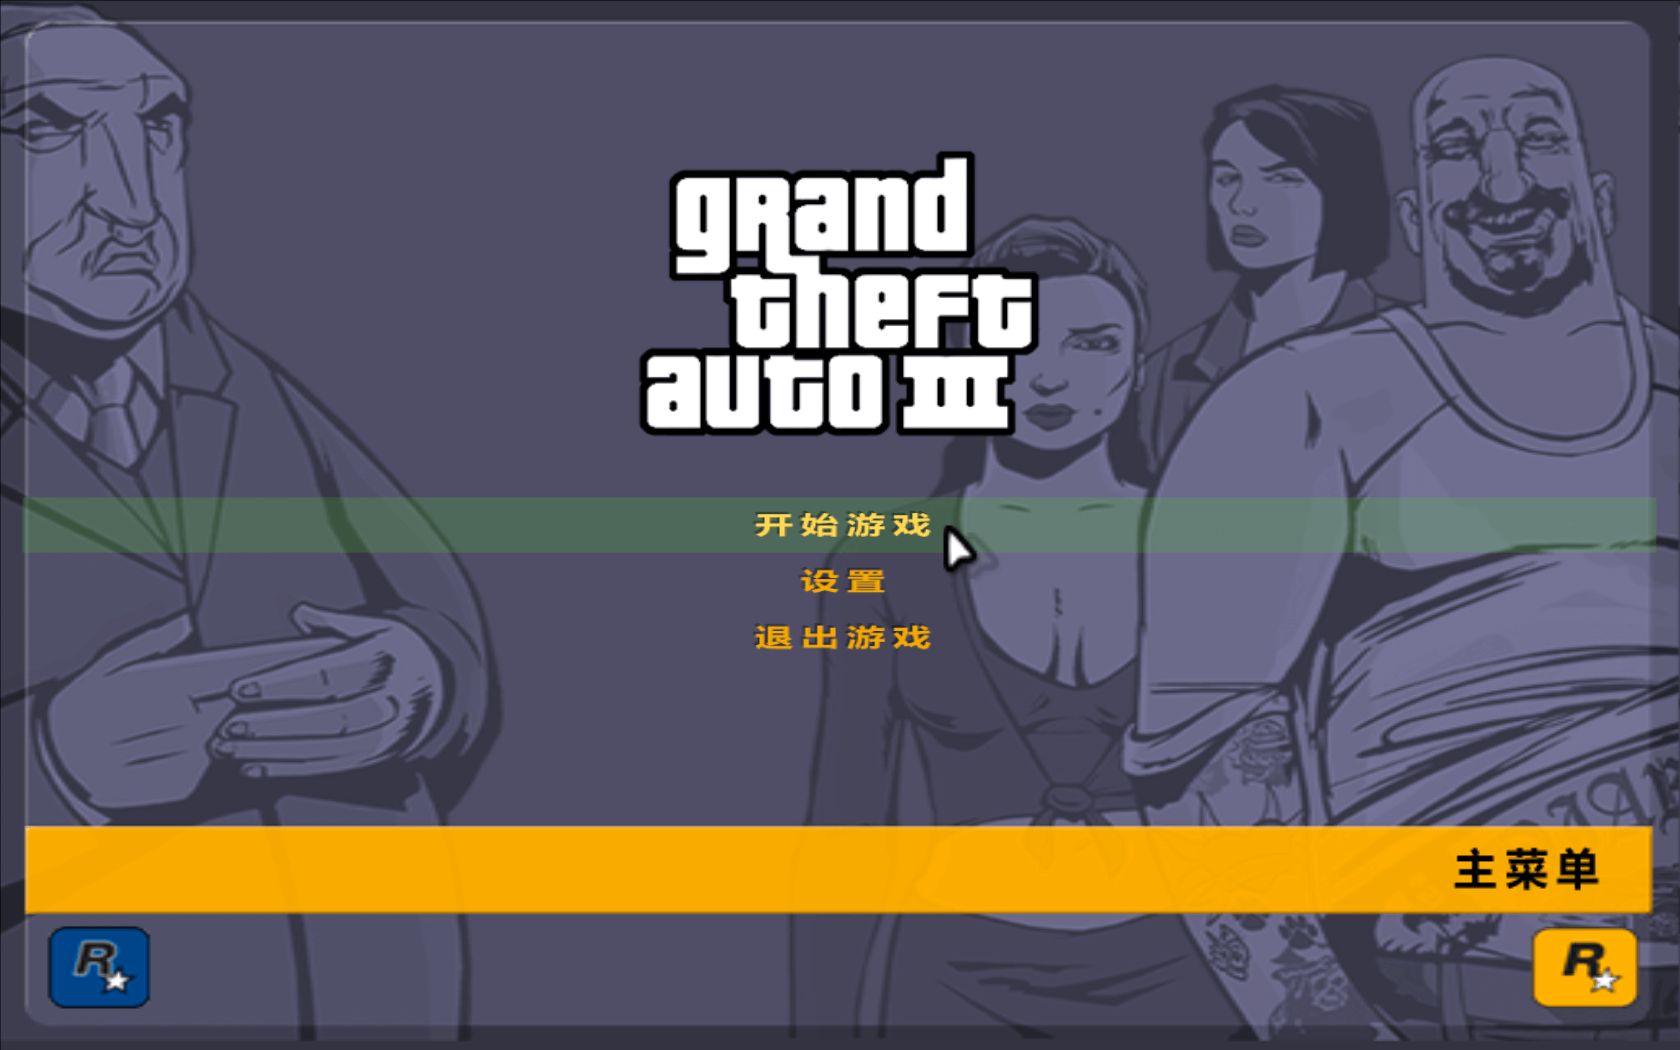 侠盗猎车手3 for Mac Grand Theft Auto III 中文移植版 苹果电脑